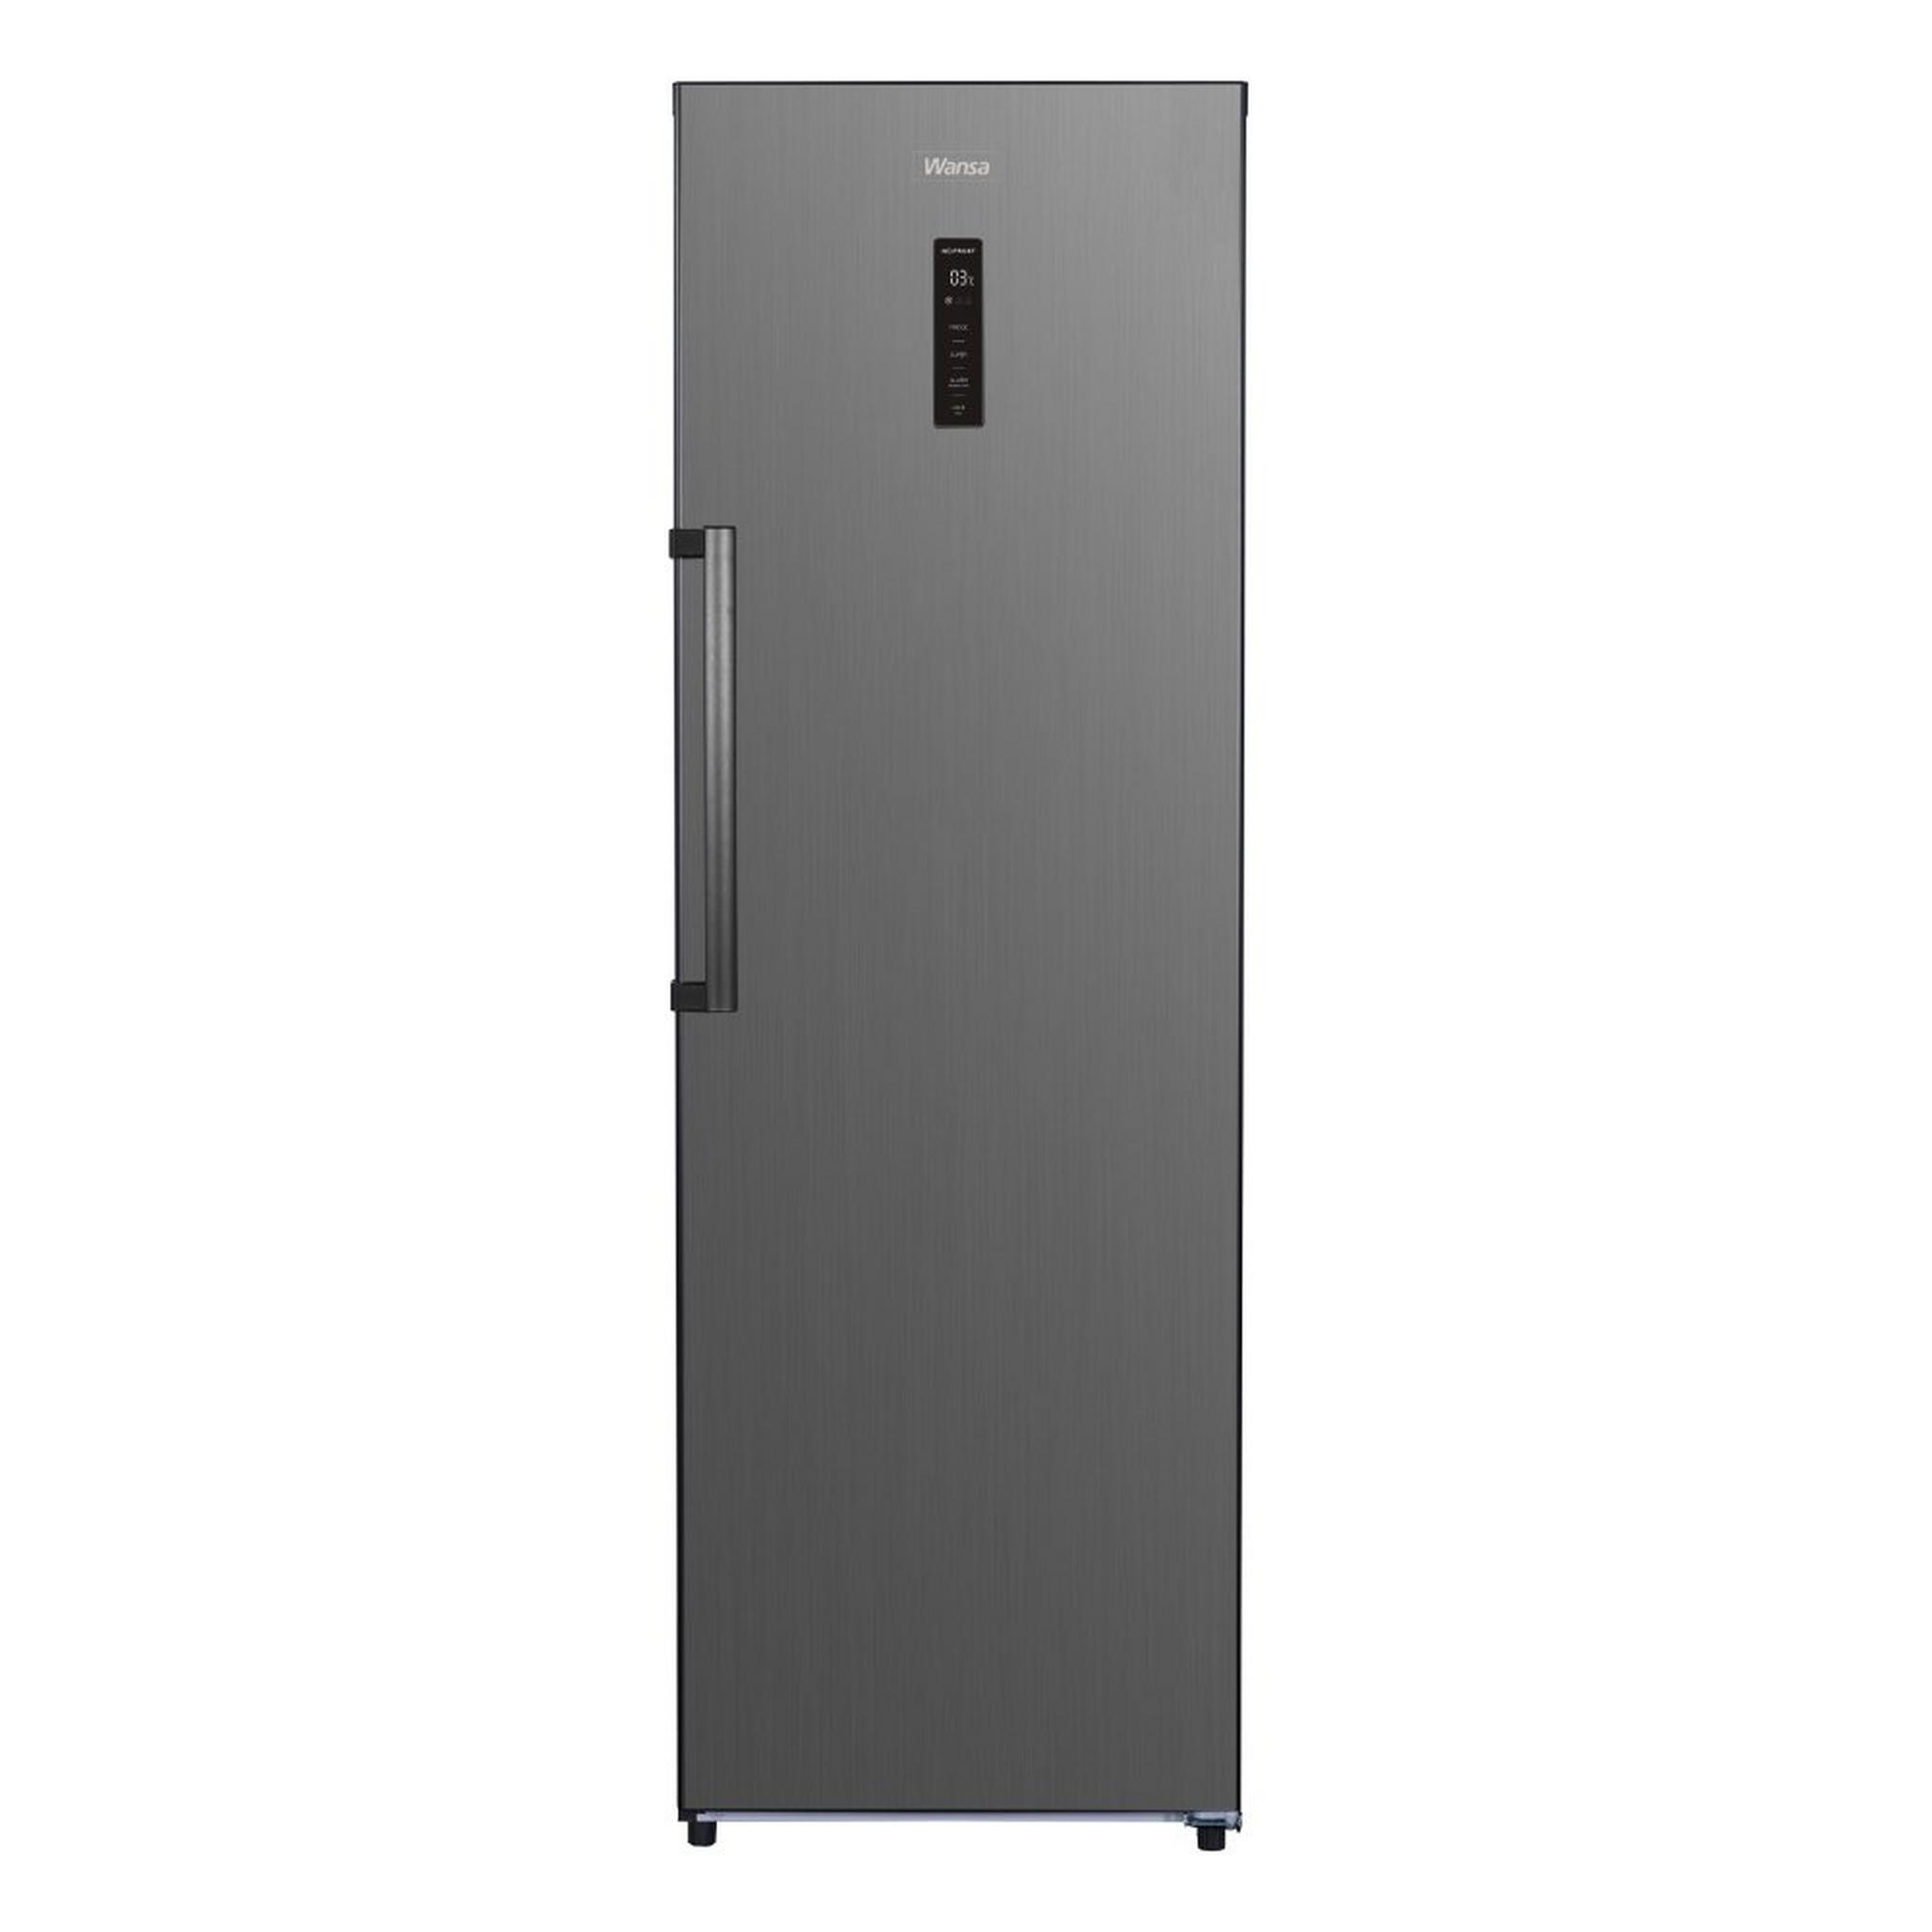 Wansa Single Door Refrigerator 13.7 Cft (WROD3-388-NFSLC82) Inox